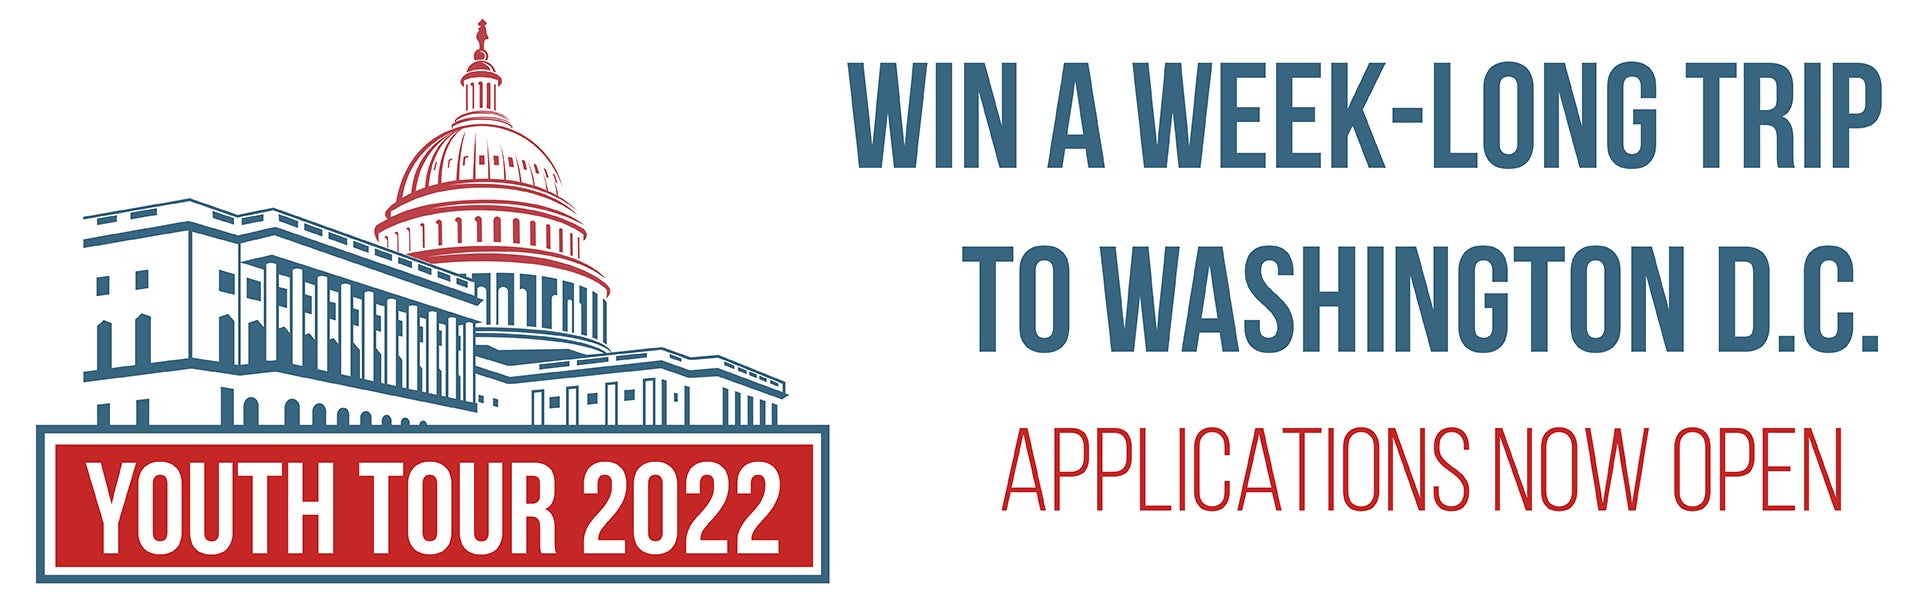 Youth Tour 2022 Win a week-long trip to Washington D.C. Applications Now Open!